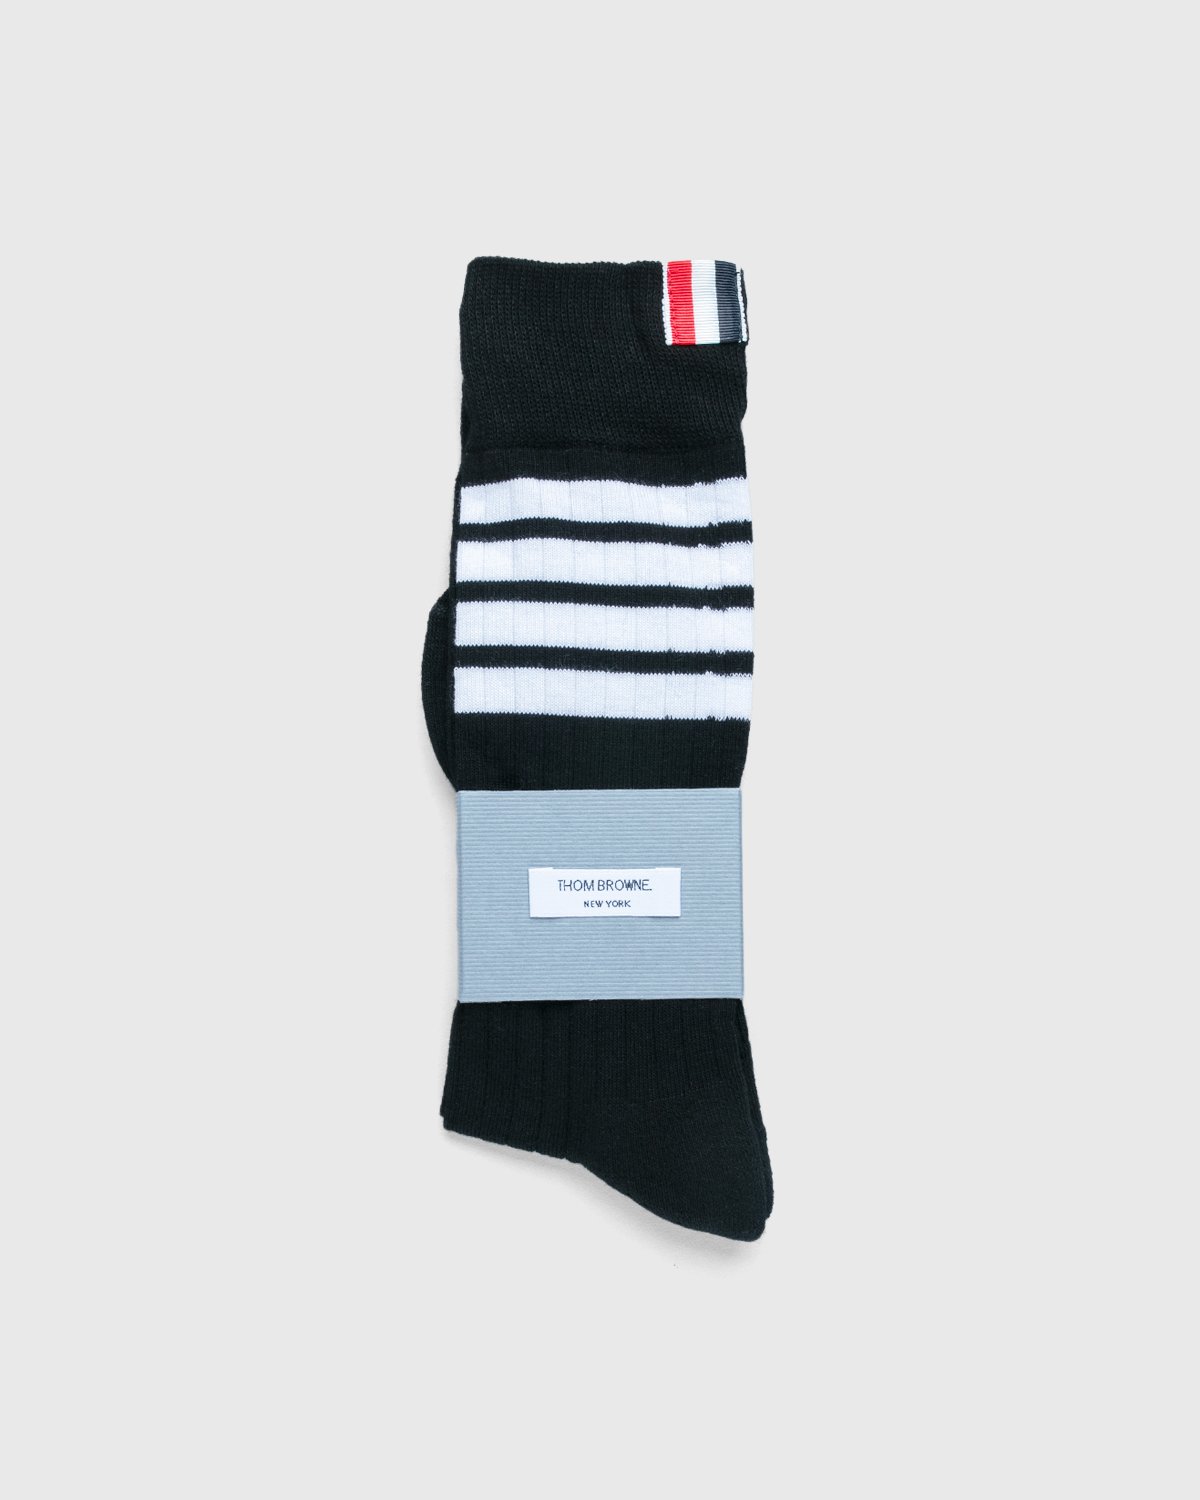 Thom Browne x Highsnobiety - Women's Mid-Calf Socks Grey - Accessories - Grey - Image 1